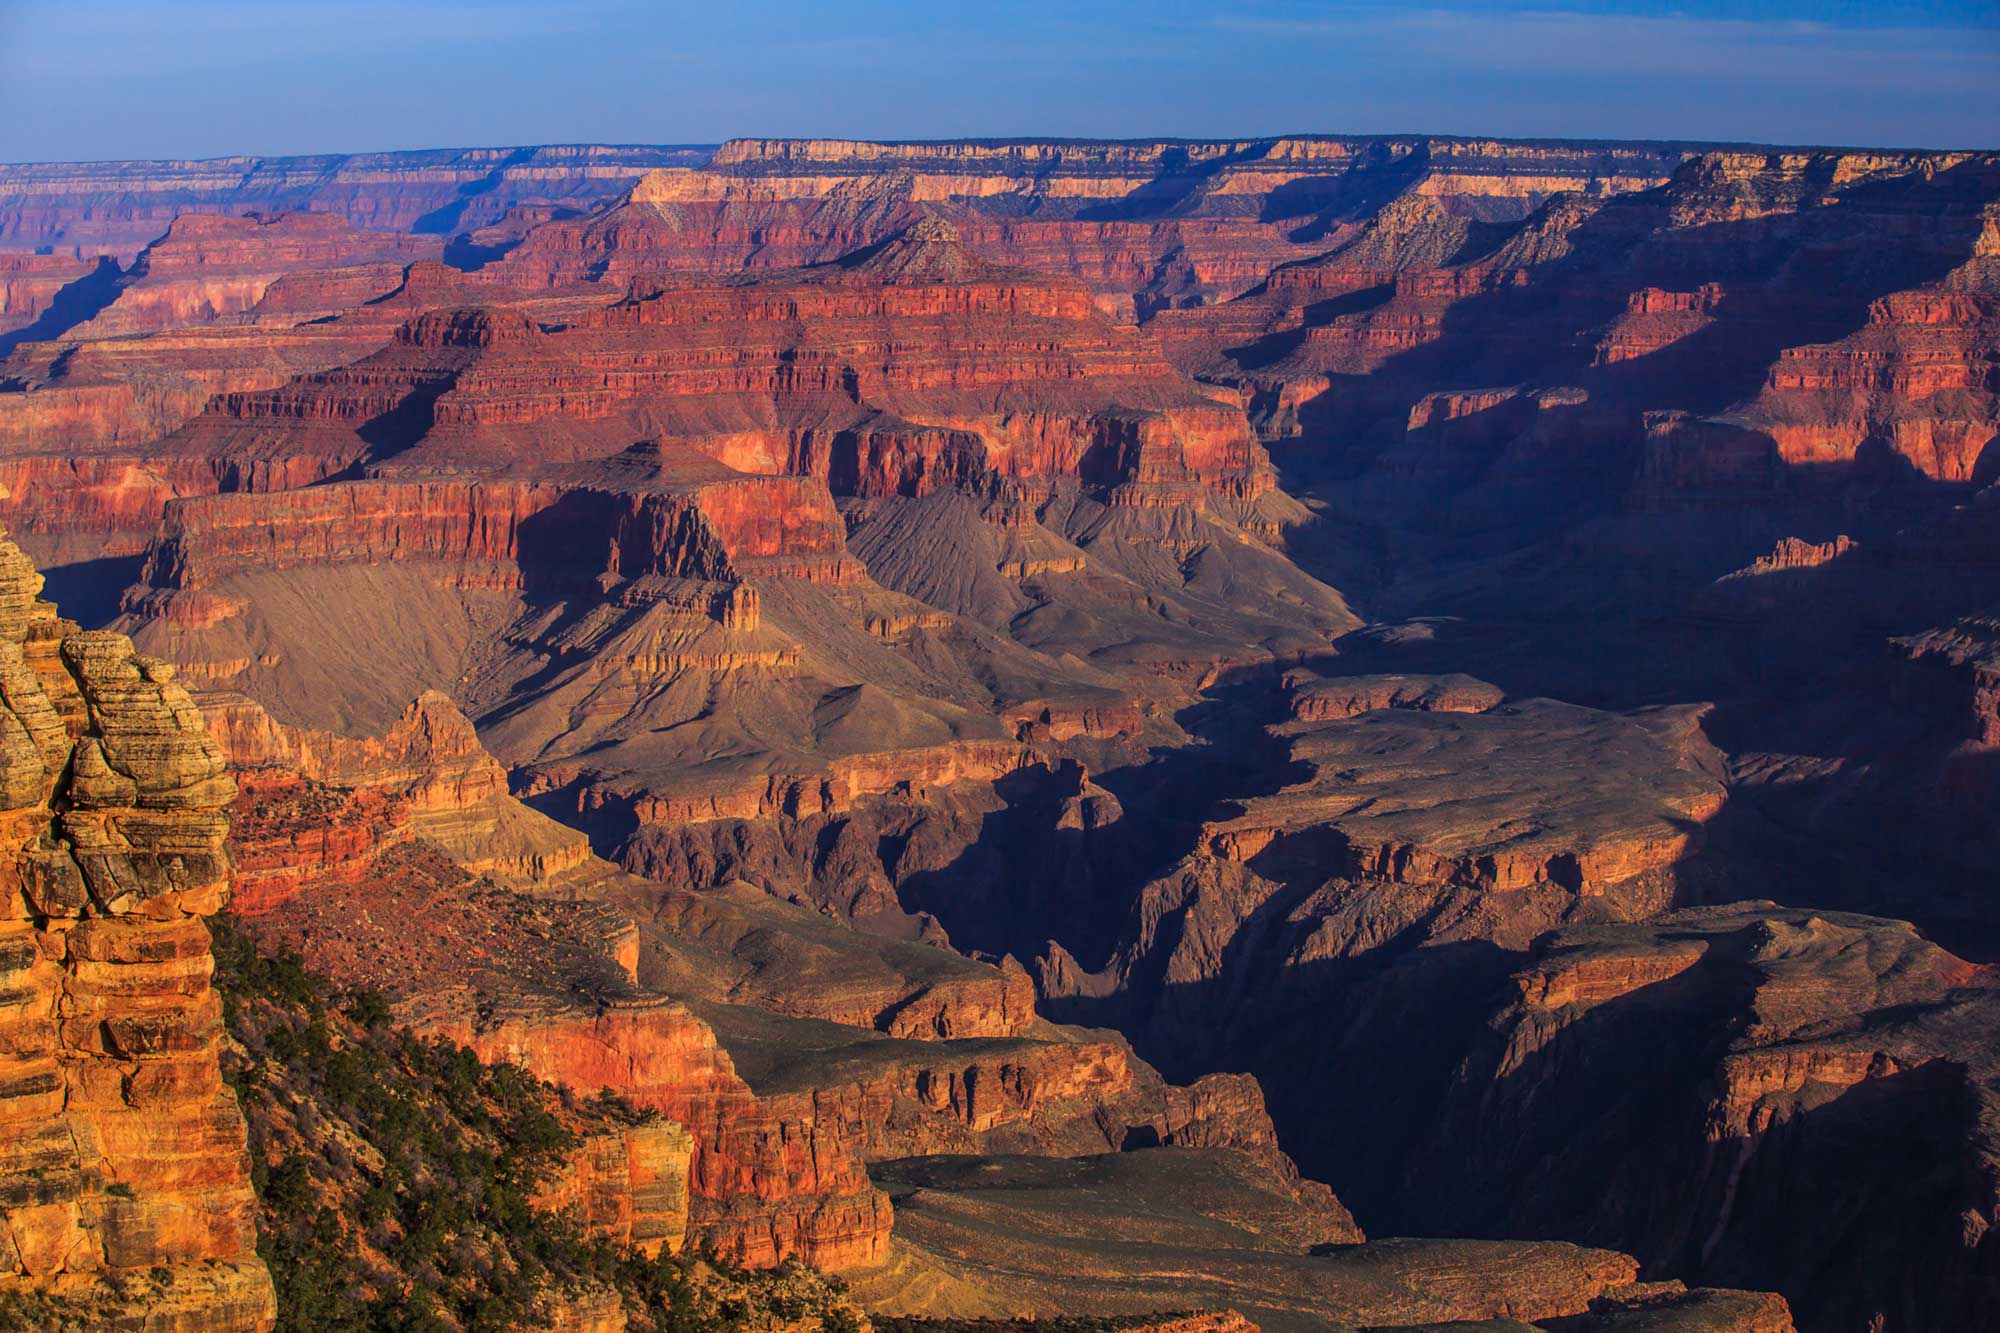 Photograph of the Grand Canyon at dawn.